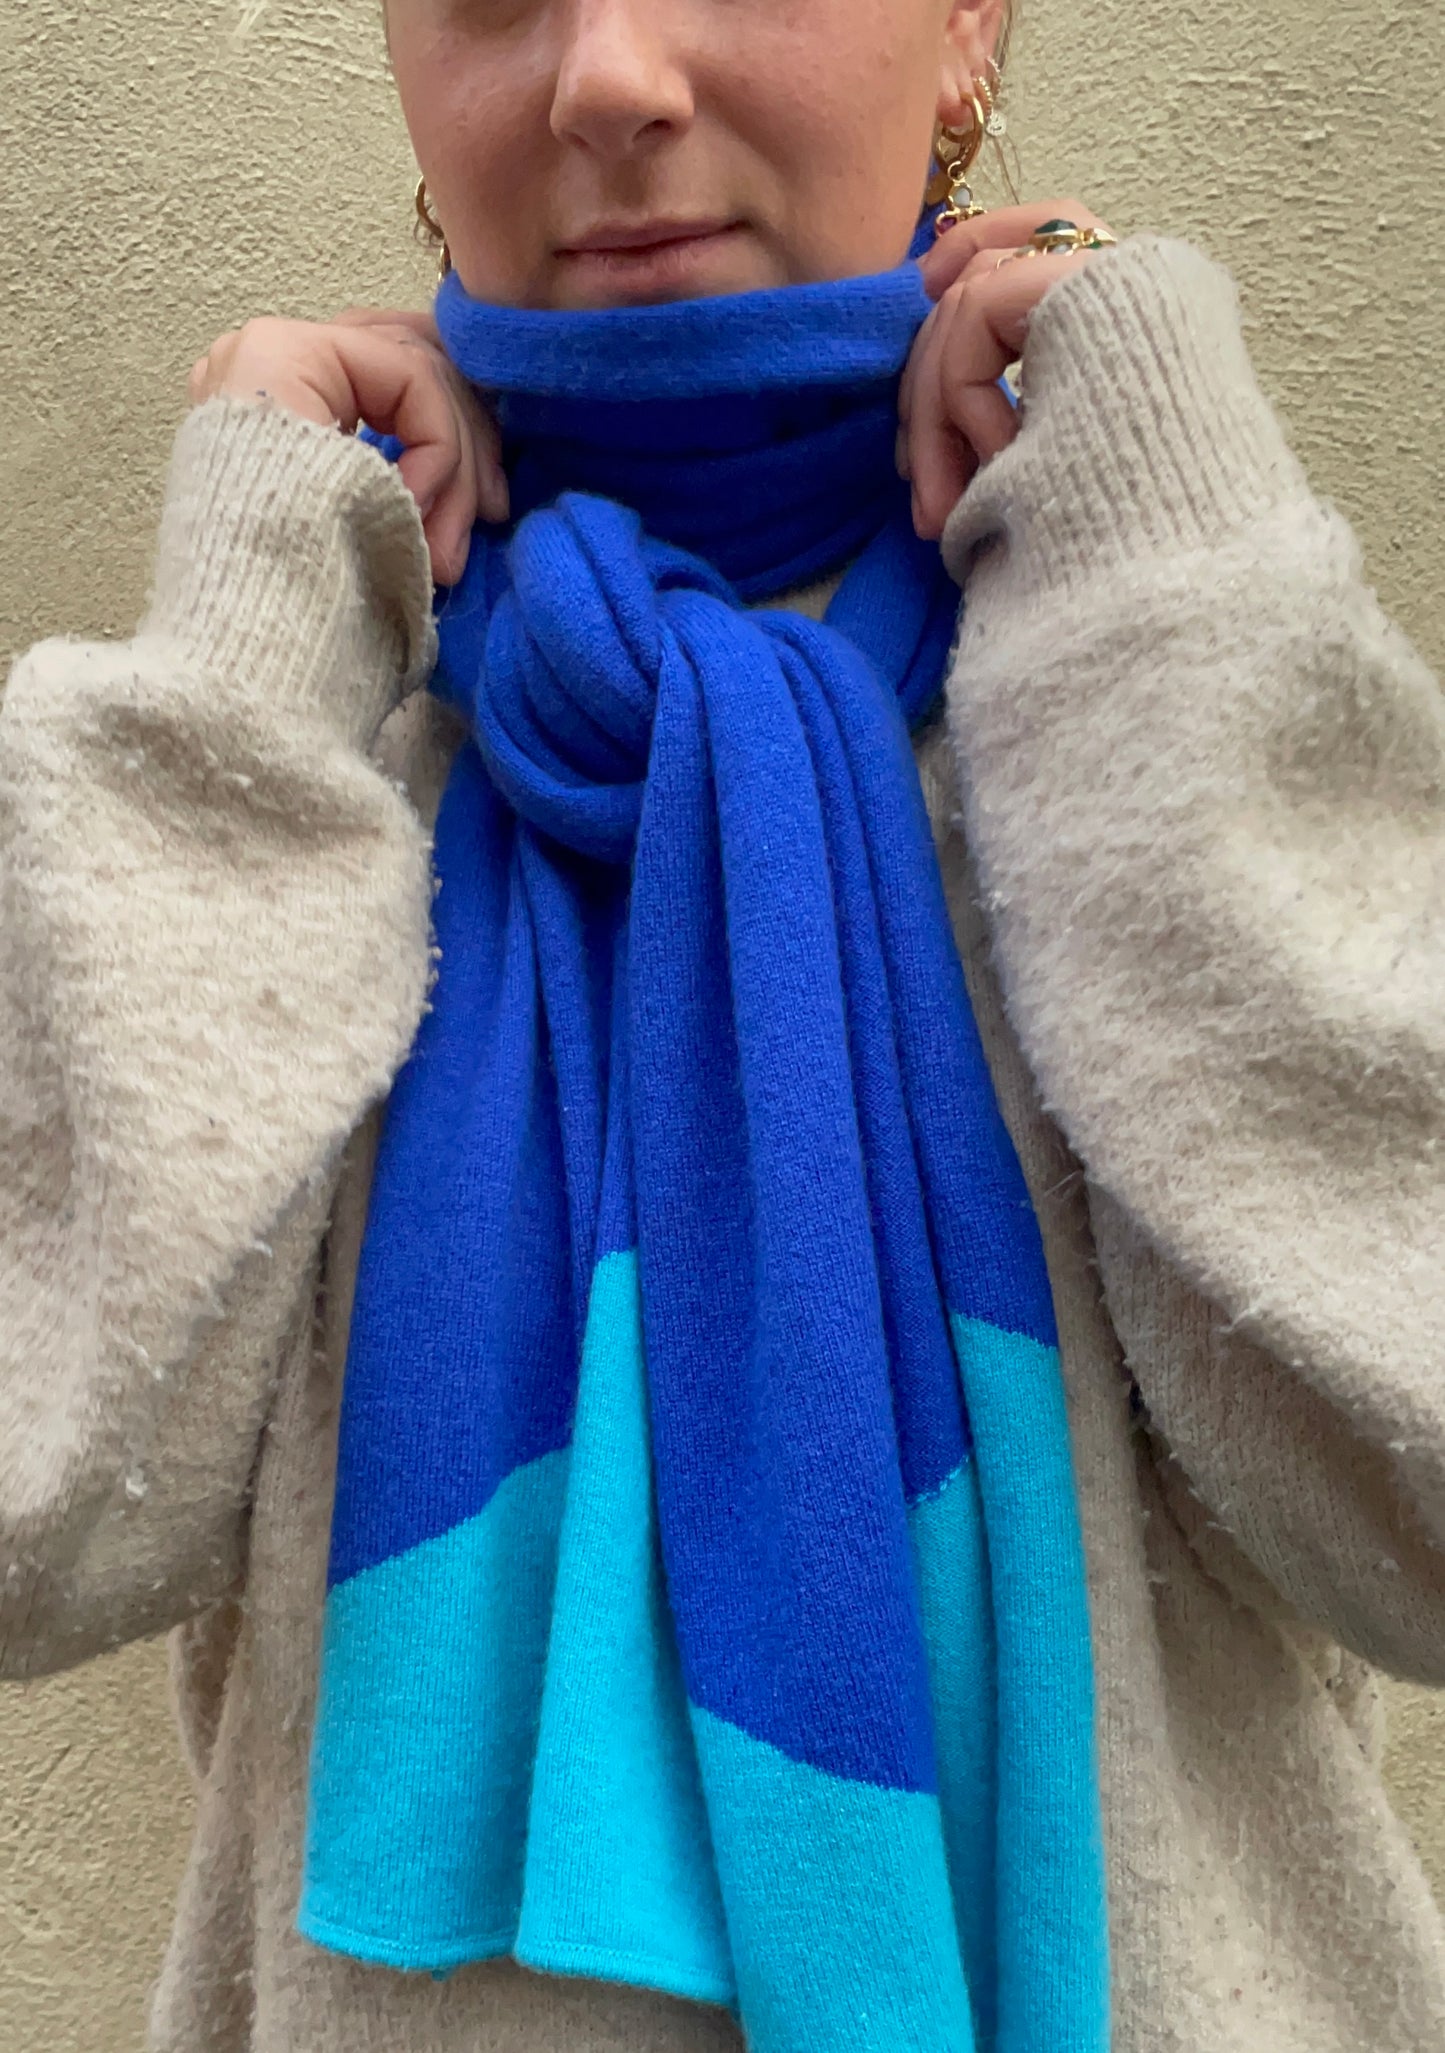 Azzura cashmere and merino wool scarf